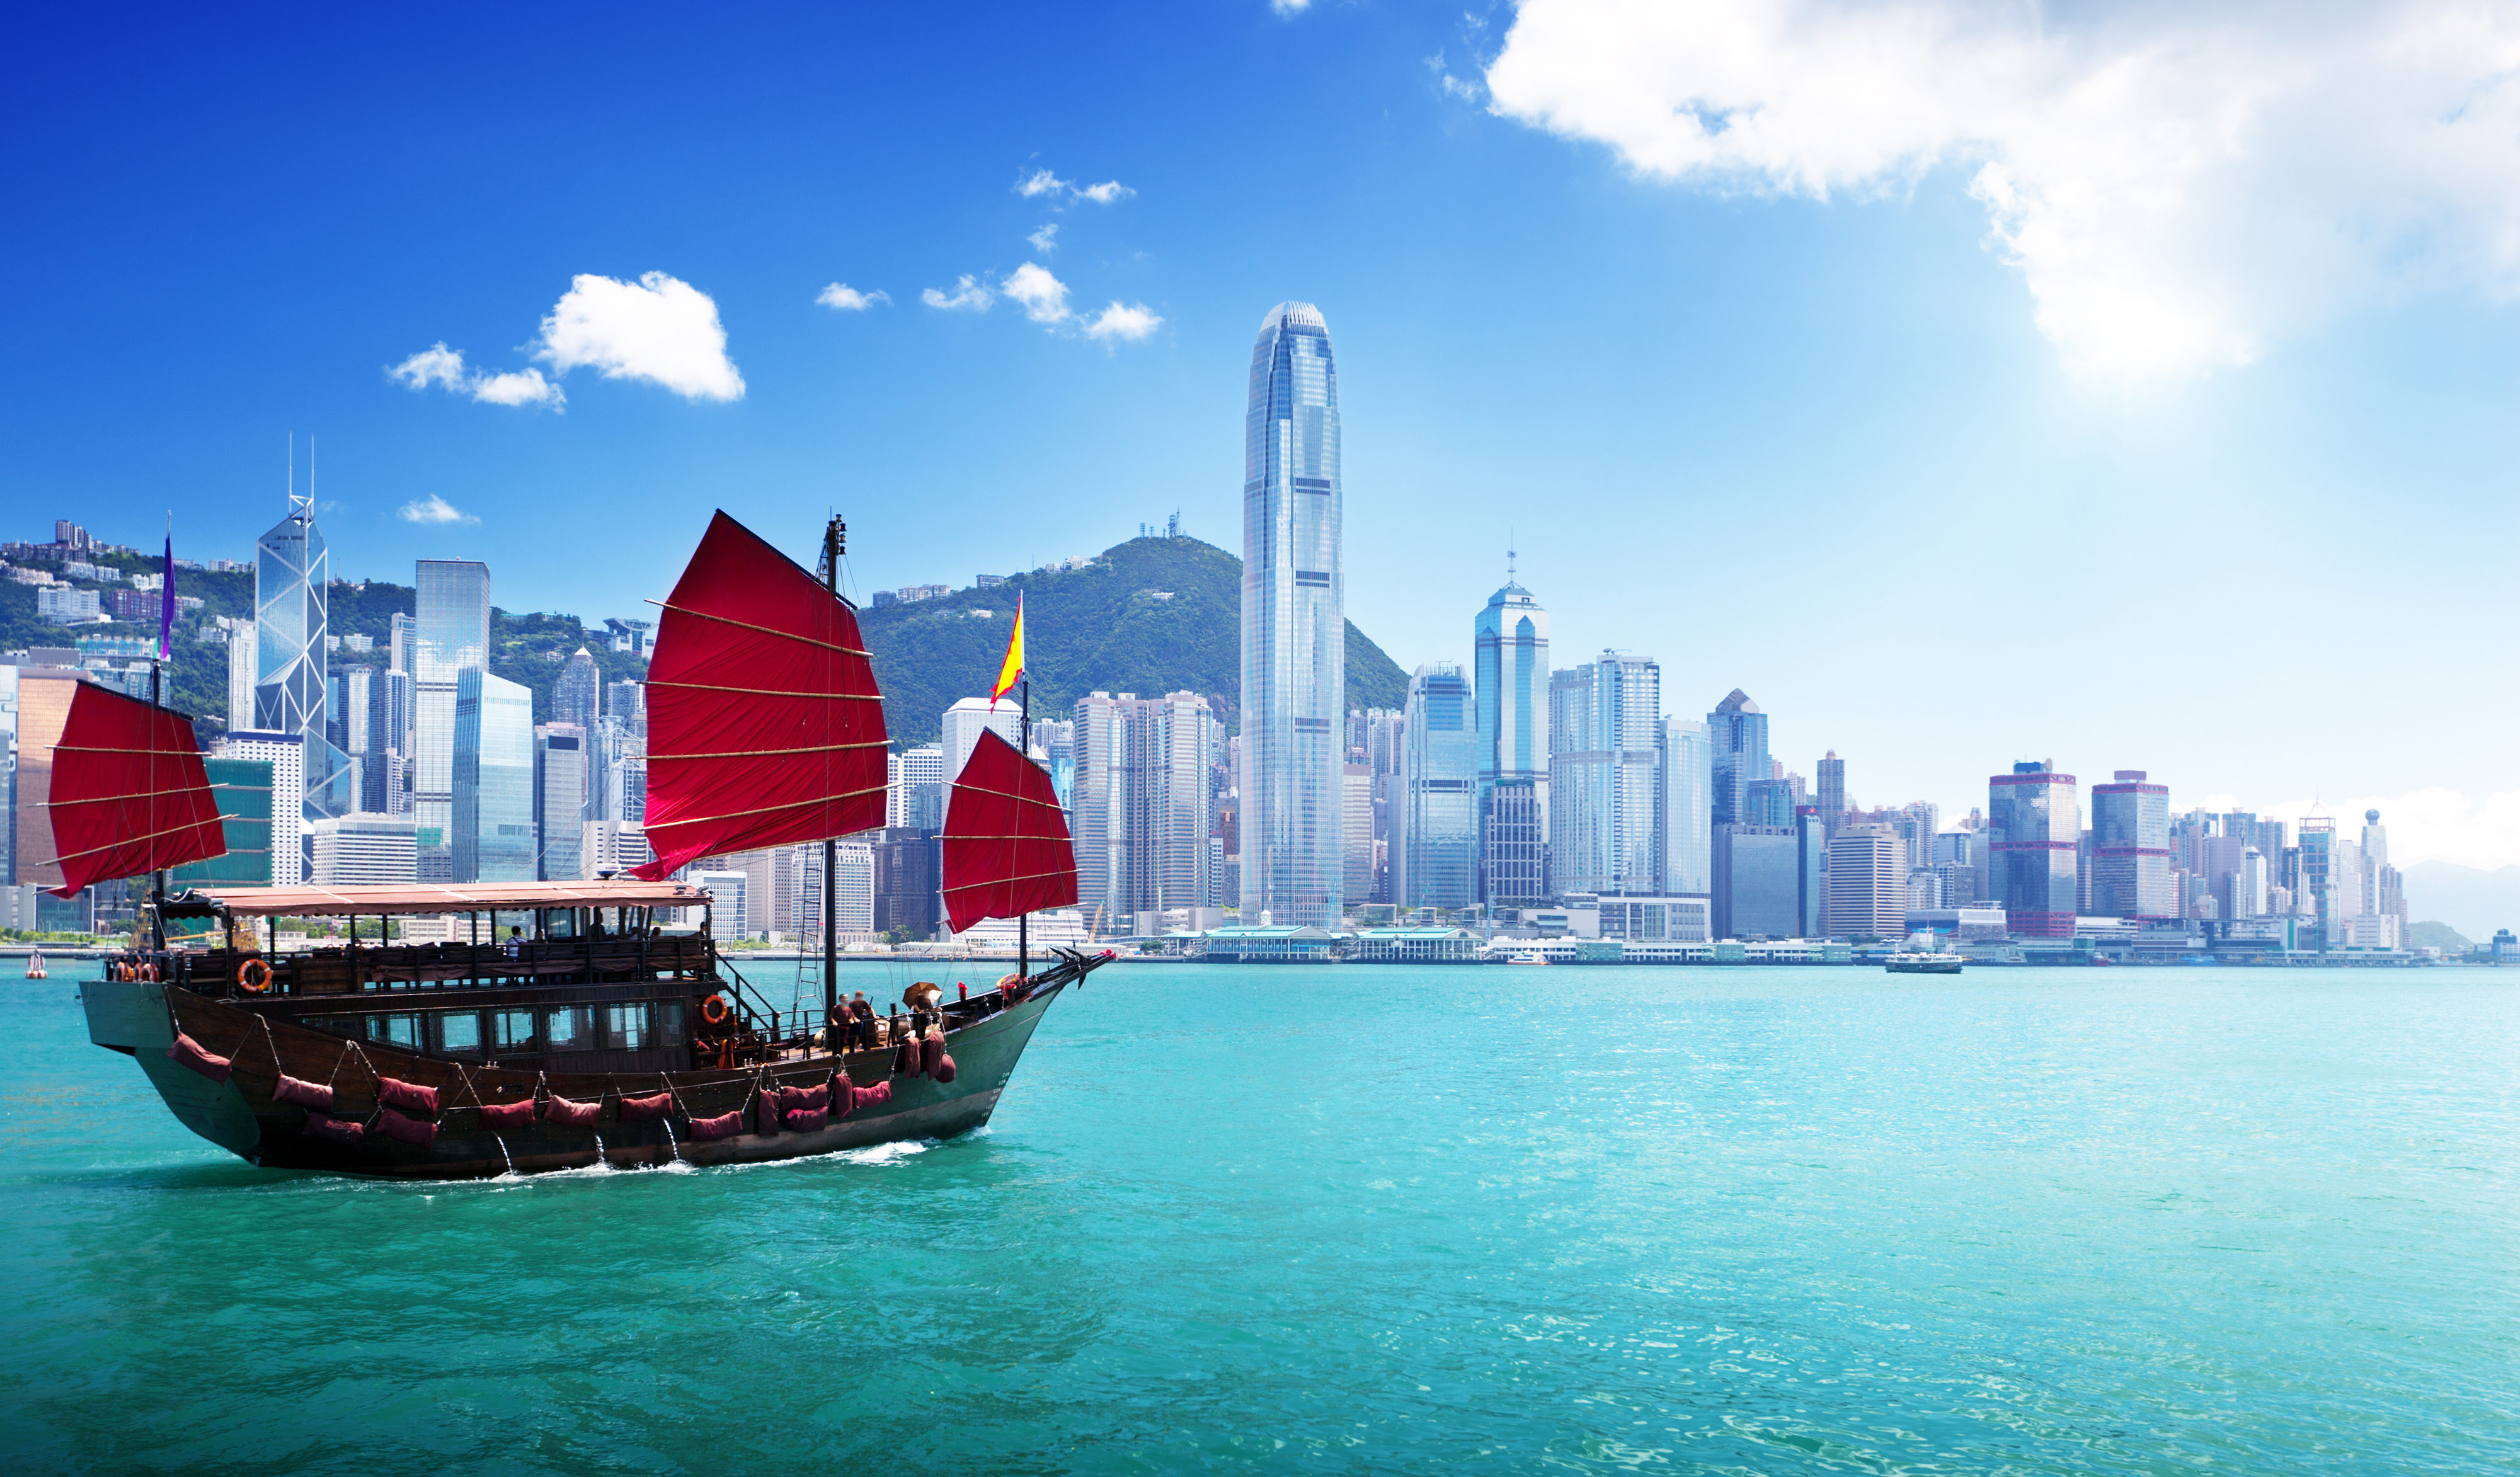 Hong Kong – The Fragrant Harbour